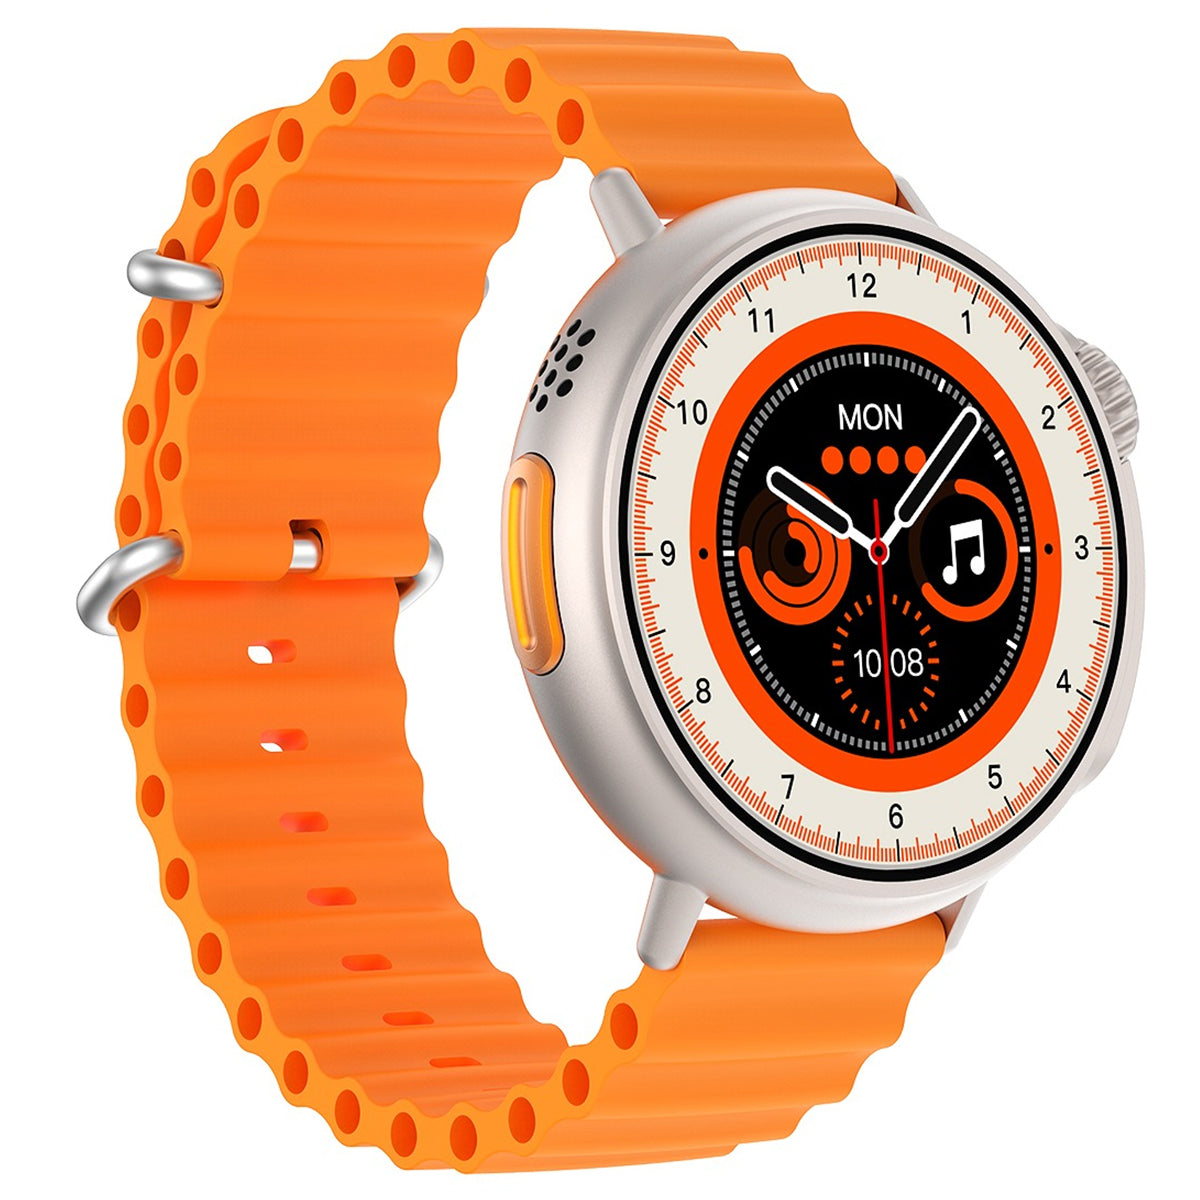 Smartwatch Reloj Inteligente Mt30 Fralugio Amoled 1.6 Pulgadas Nfc